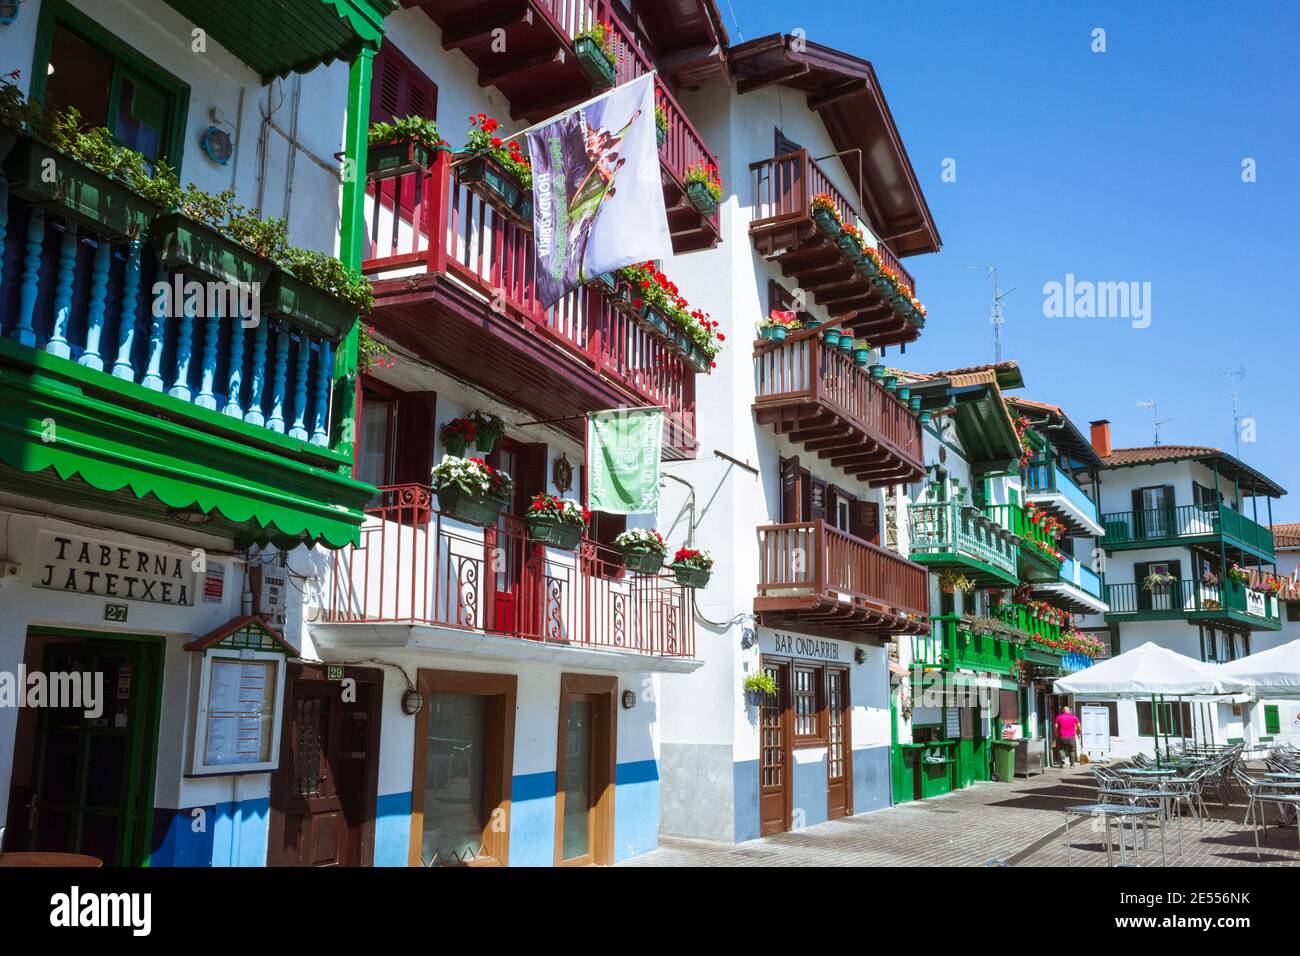 Hondarribia, Gipuzkoa, Basque Country, Spain - July 11th, 2019 : Colourful facades of traditional buildings in the  barrio de la Marina fishermen's qu Stock Photo